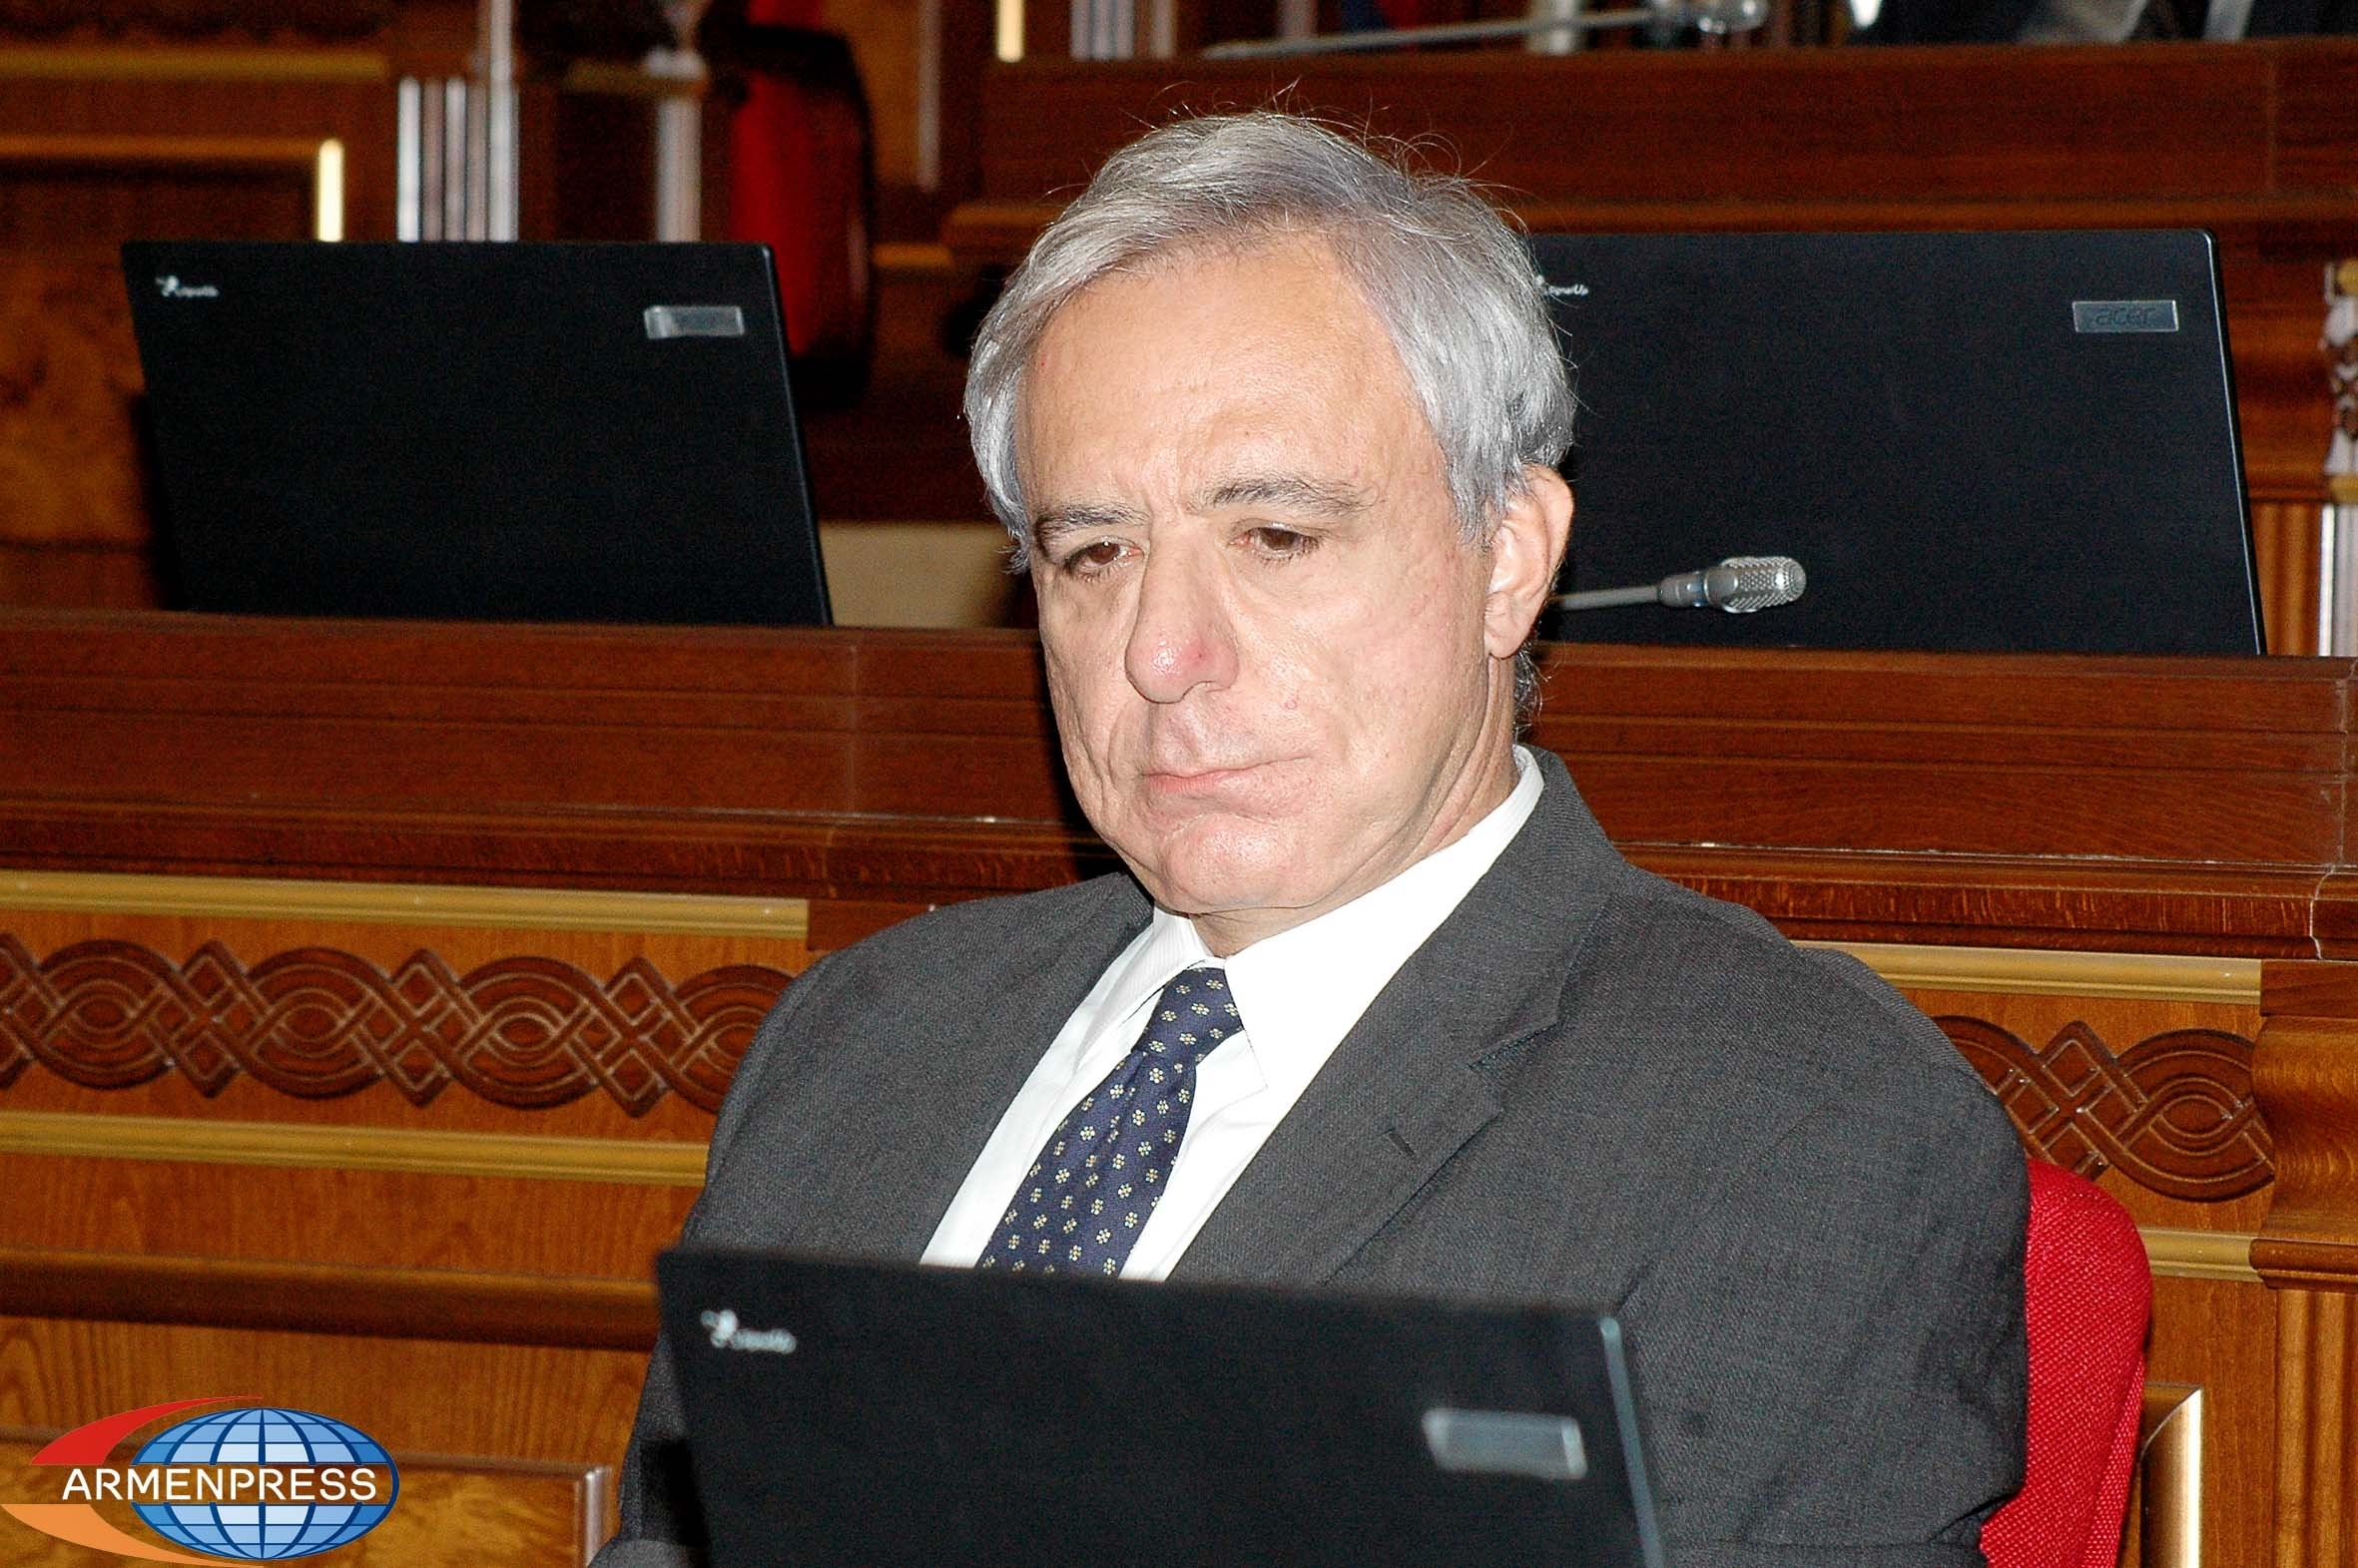 Vartan Oskanian gives up parliamentary seat